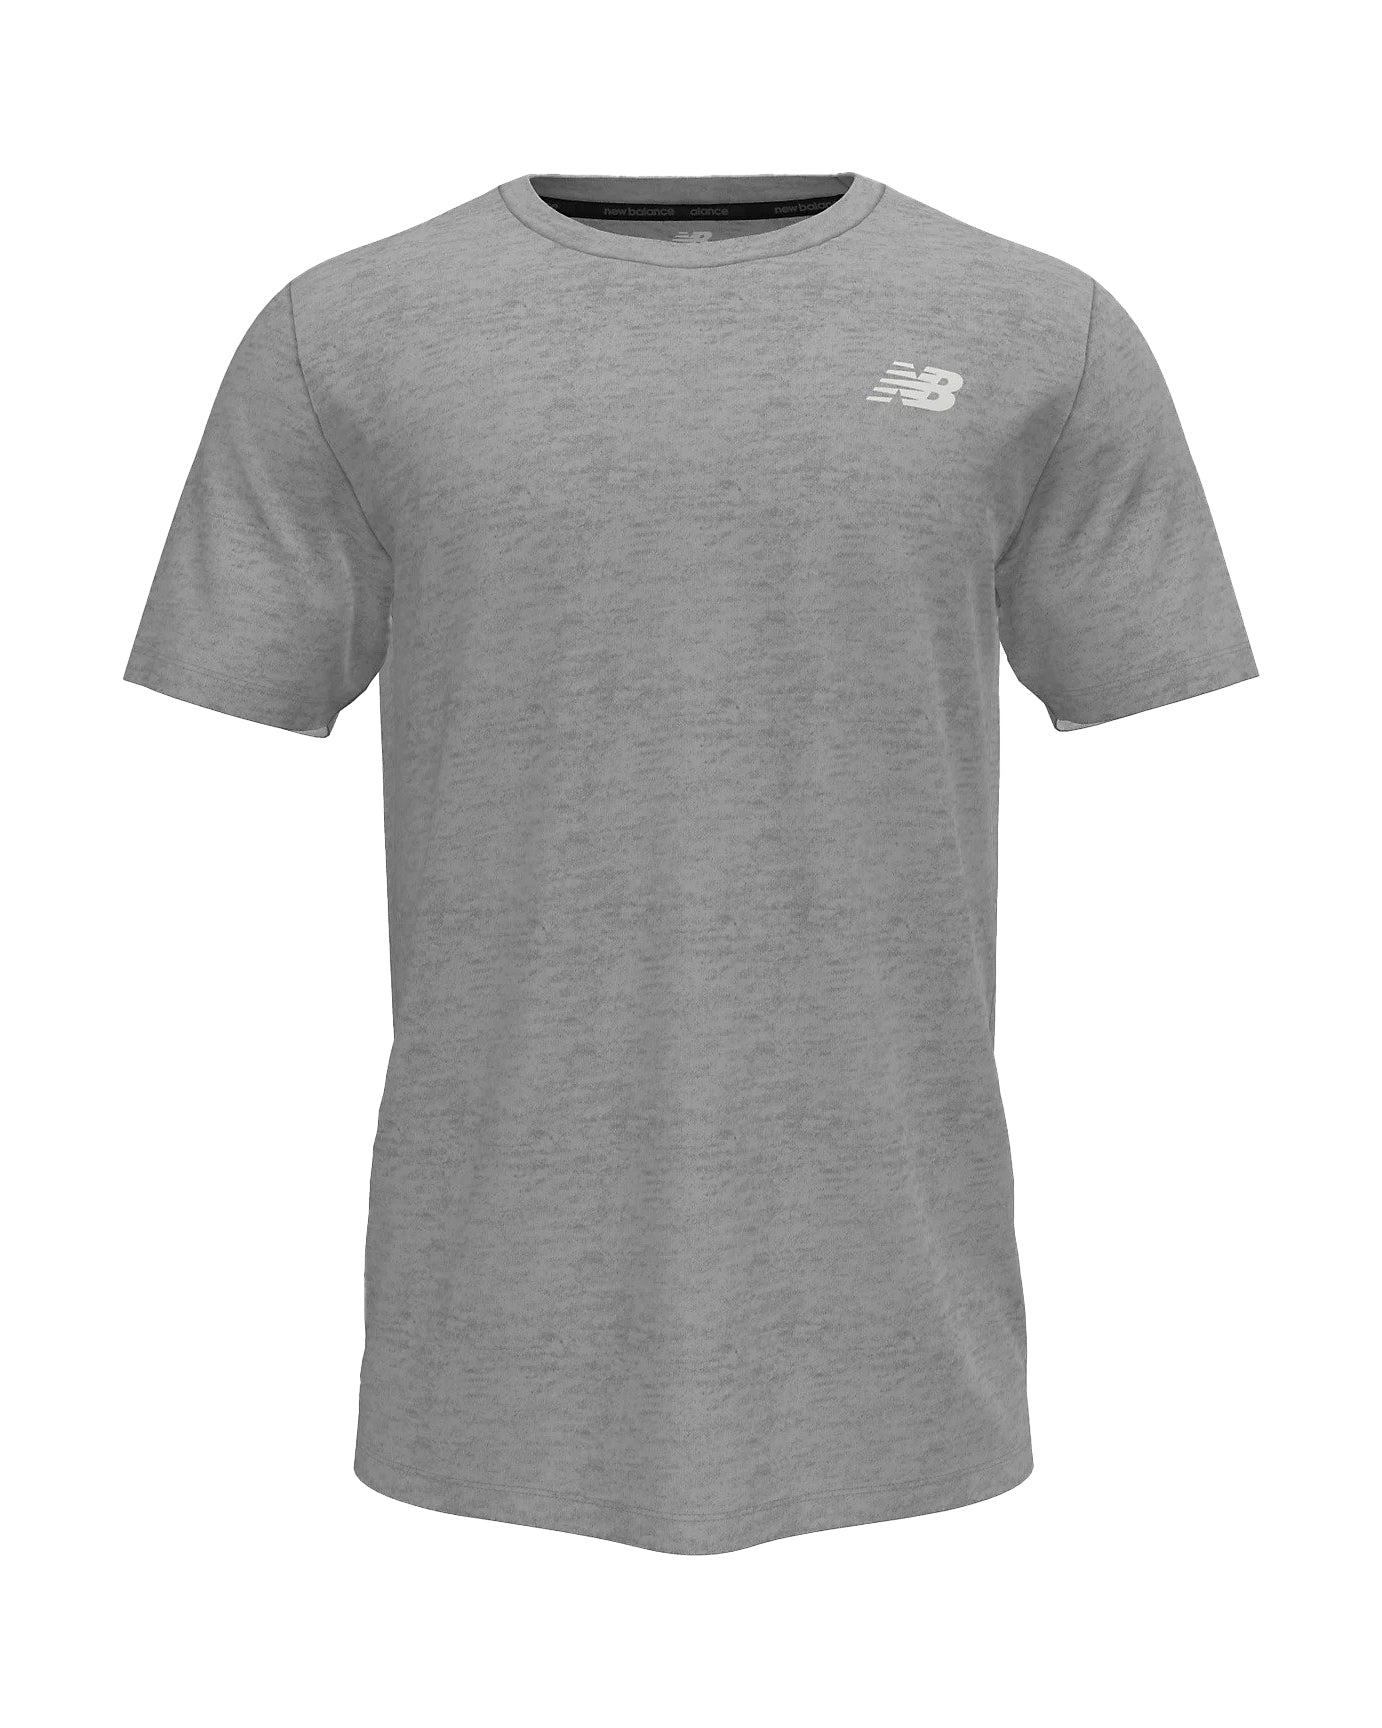 New Balance Heathertech T-Shirt Grey